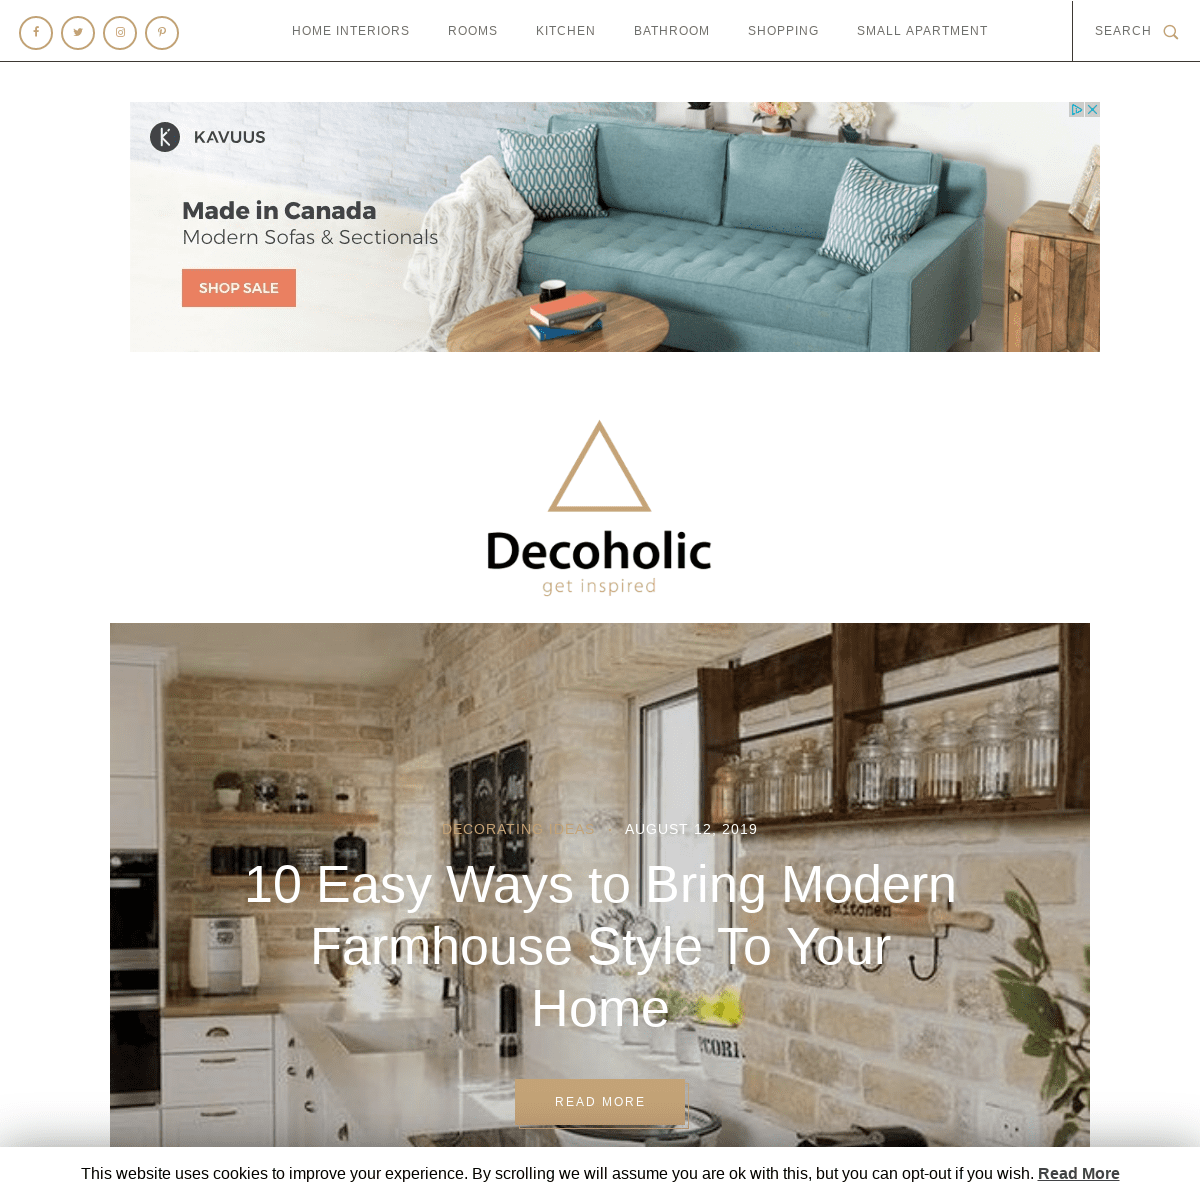 Decoholic - Interior Design, Living Room - Bedroom Ideas